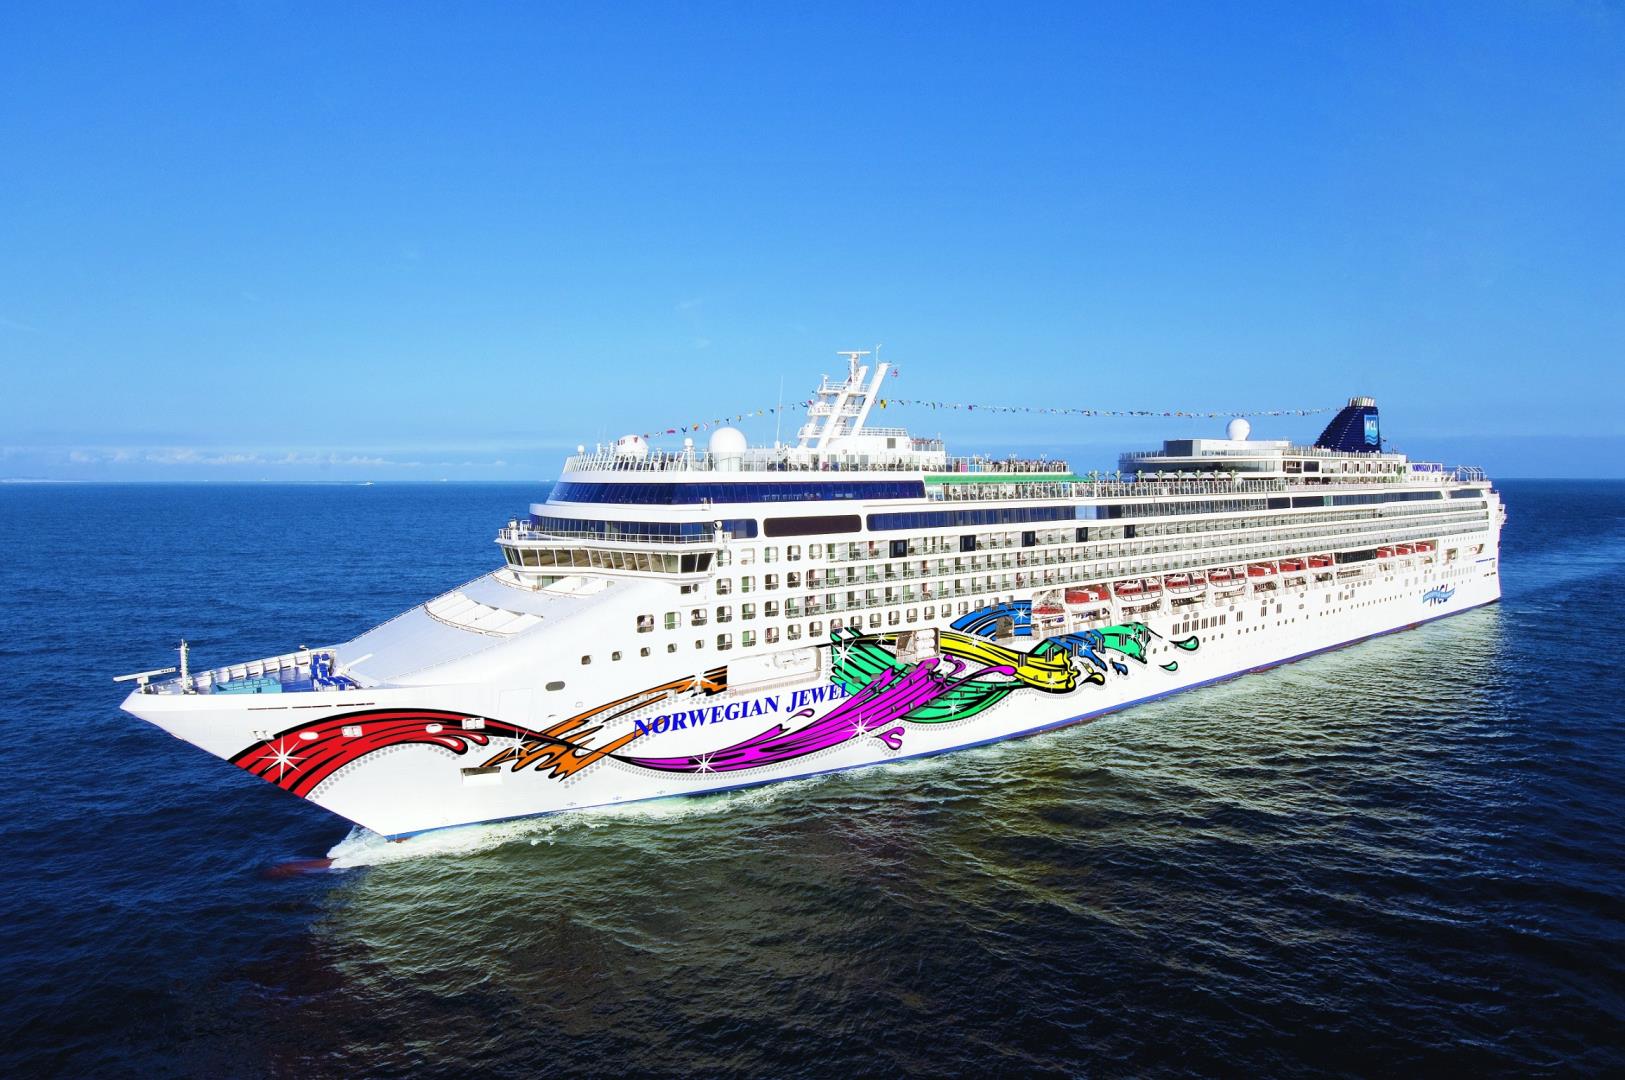 12-day Cruise to Caribbean: Curacao, Aruba & Dominican Republic from Tampa, Florida on Norwegian Jewel